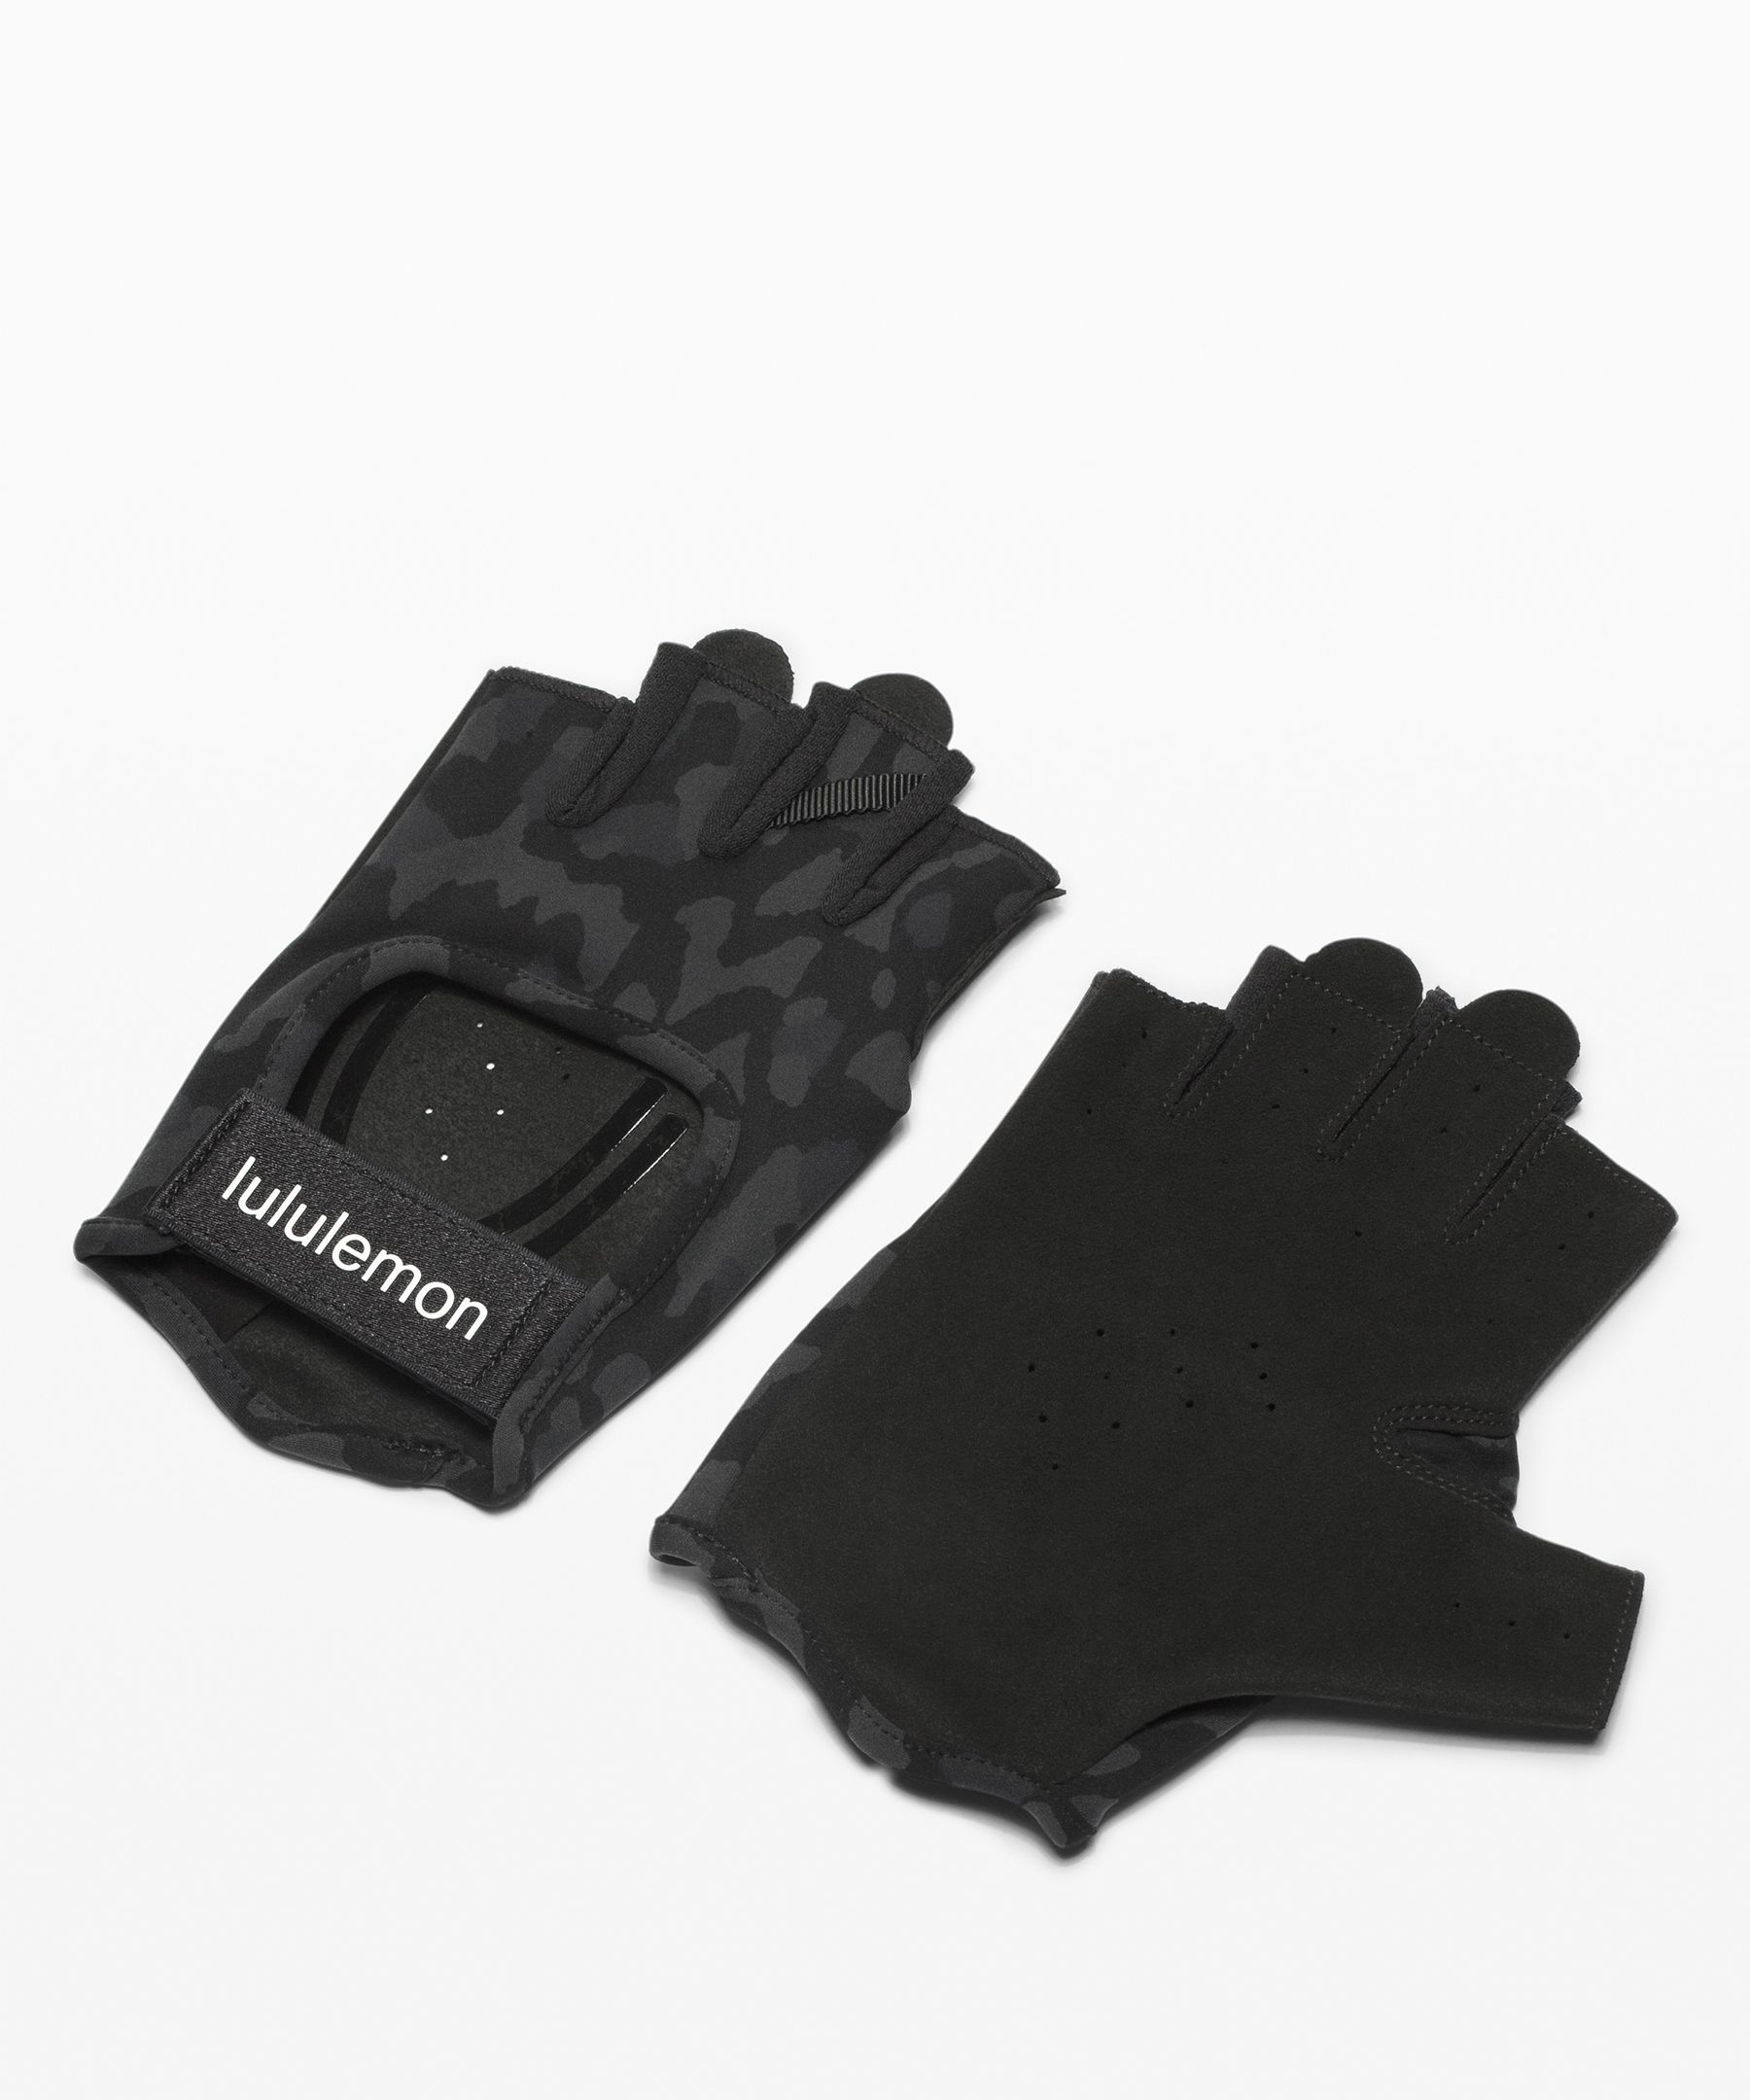 lululemon uplift training gloves